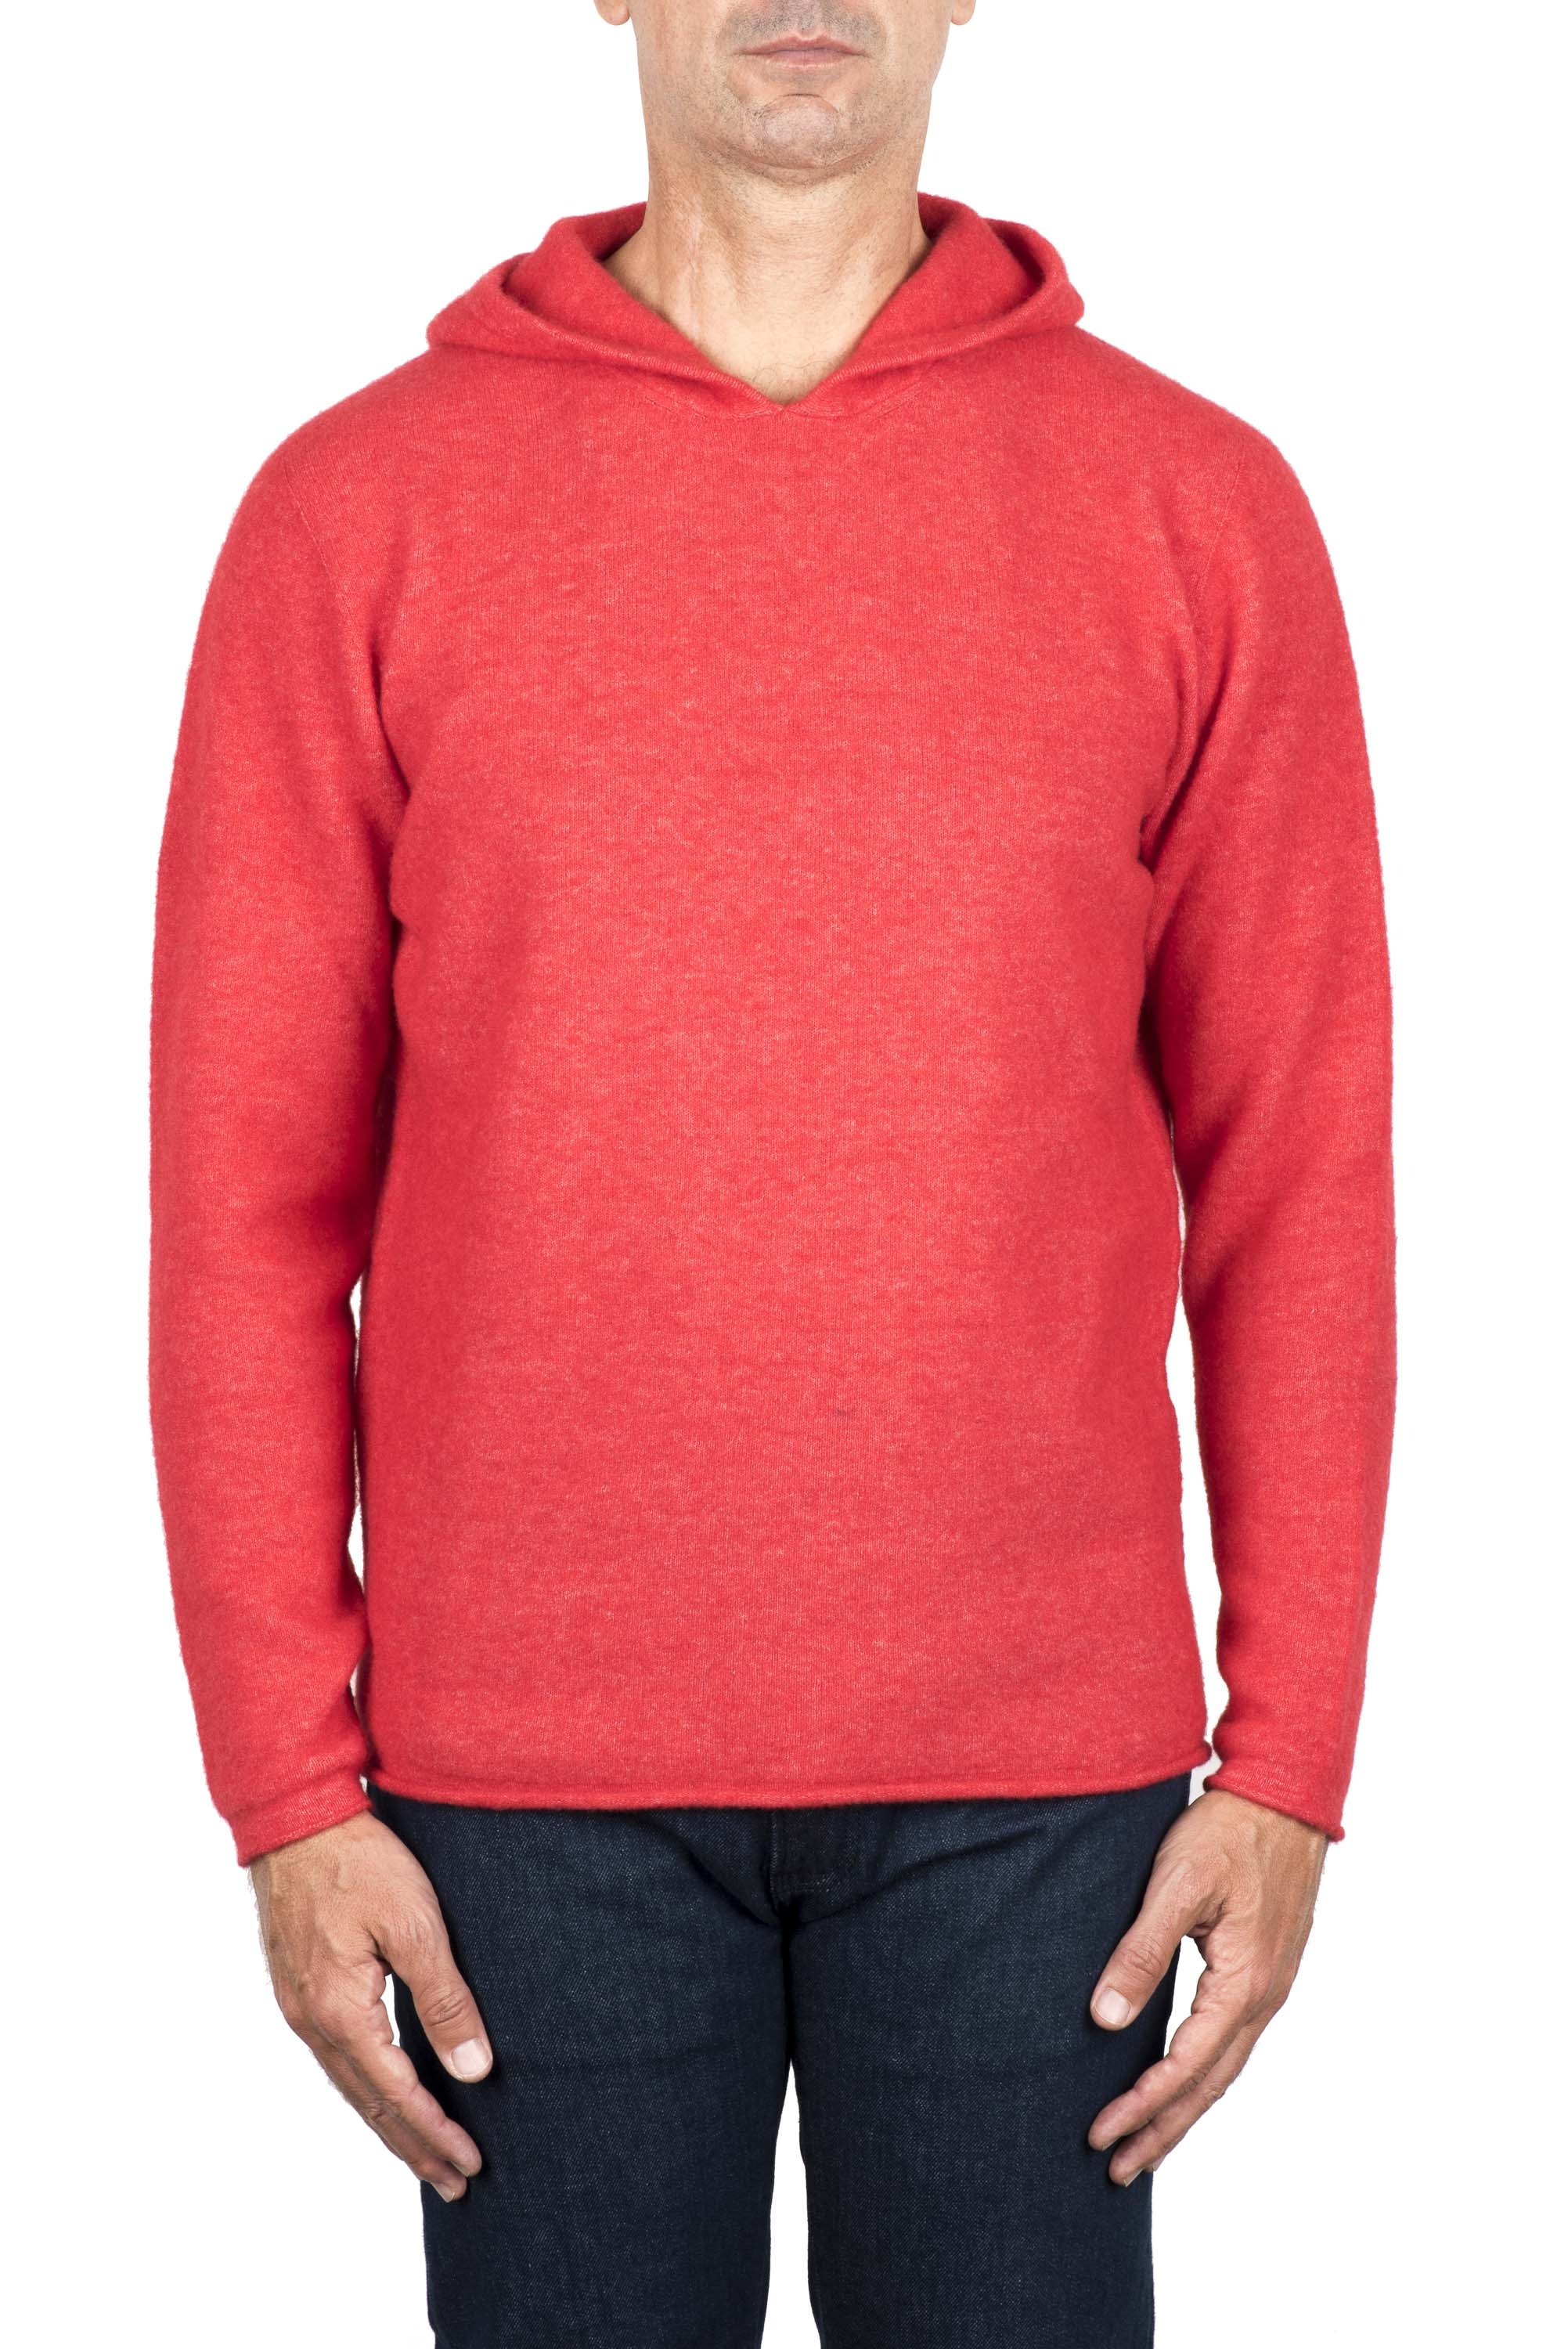 SBU 03520_2021AW Jersey rojo con capucha de mezcla de lana merino 01